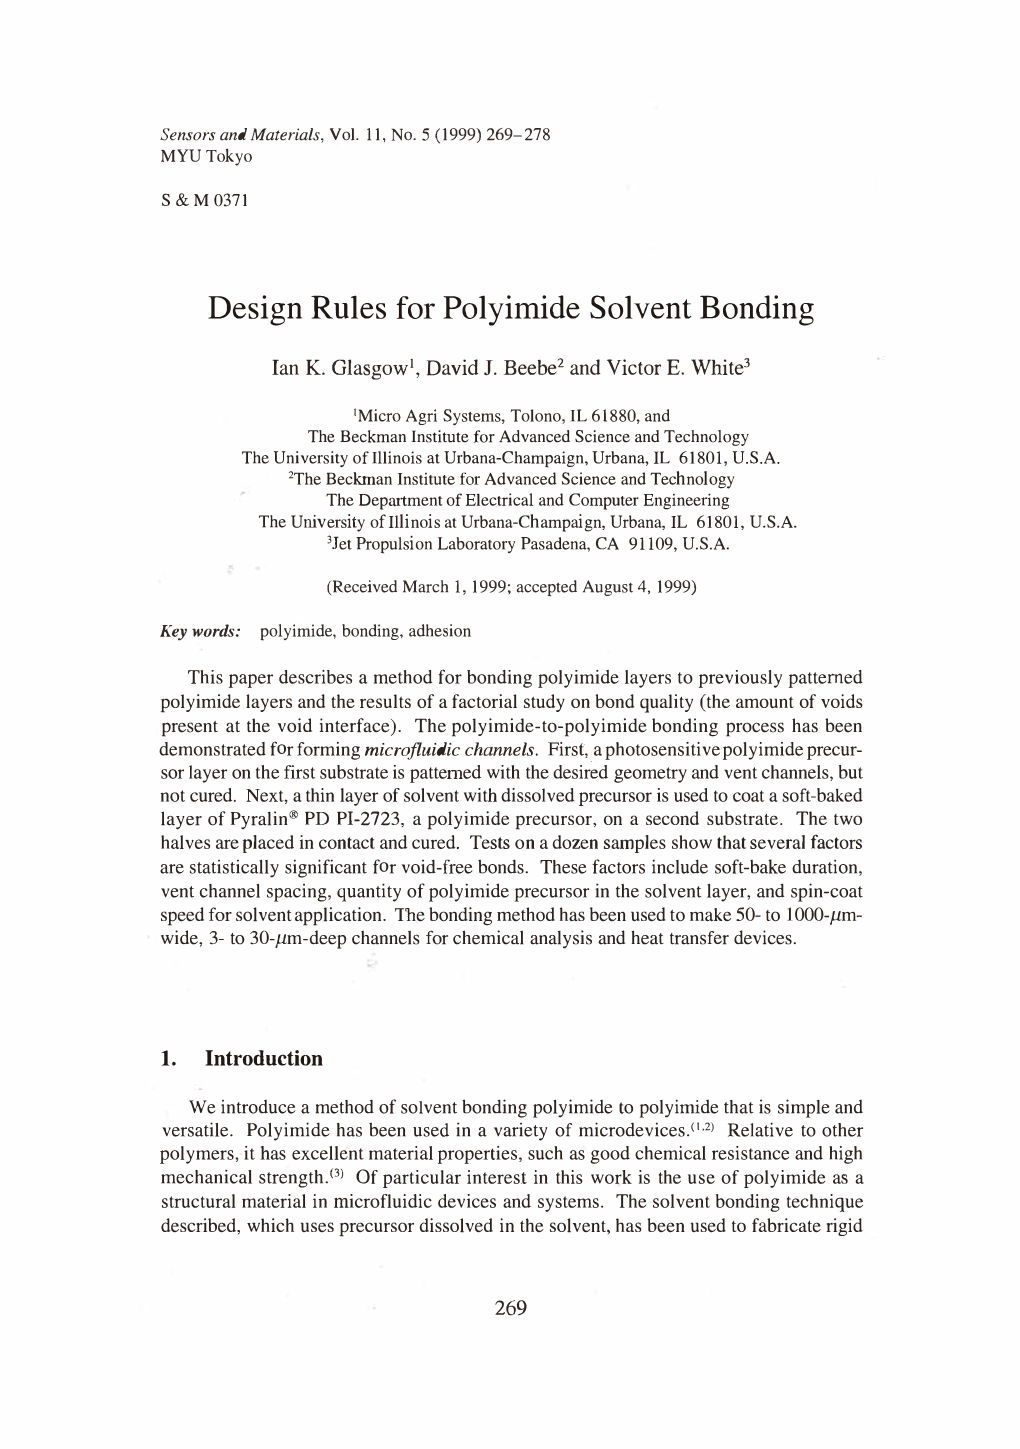 Design Rules for Polyimide Solvent Bonding